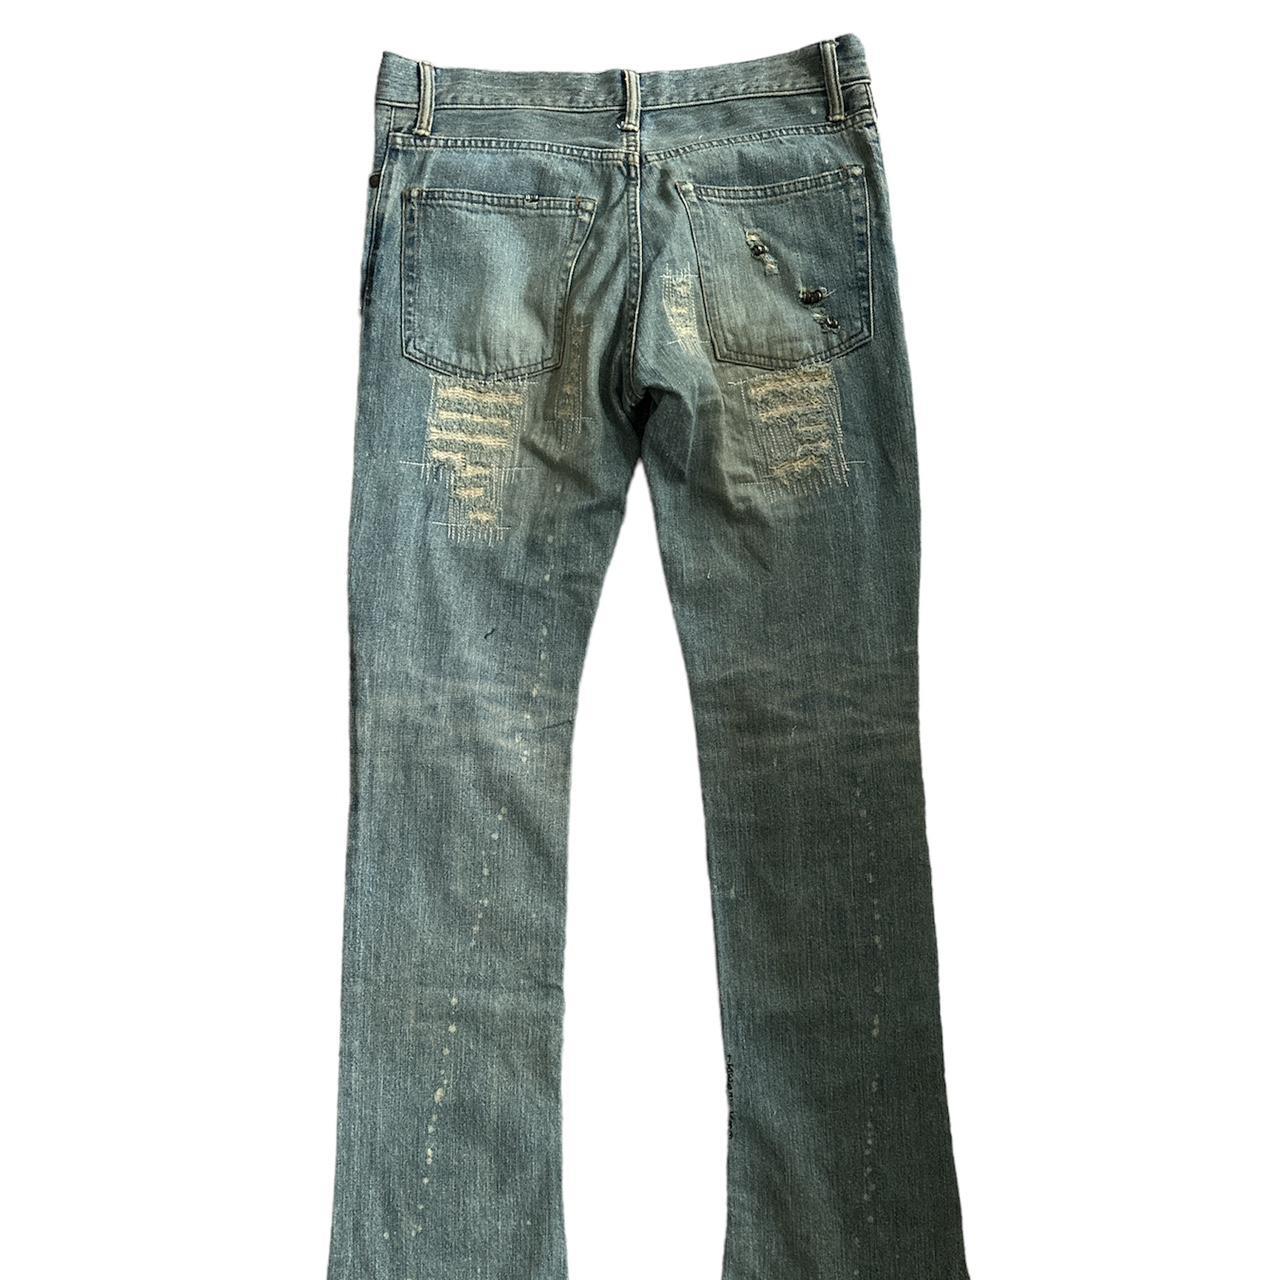 Mud max jeans Never worn New listing - Depop